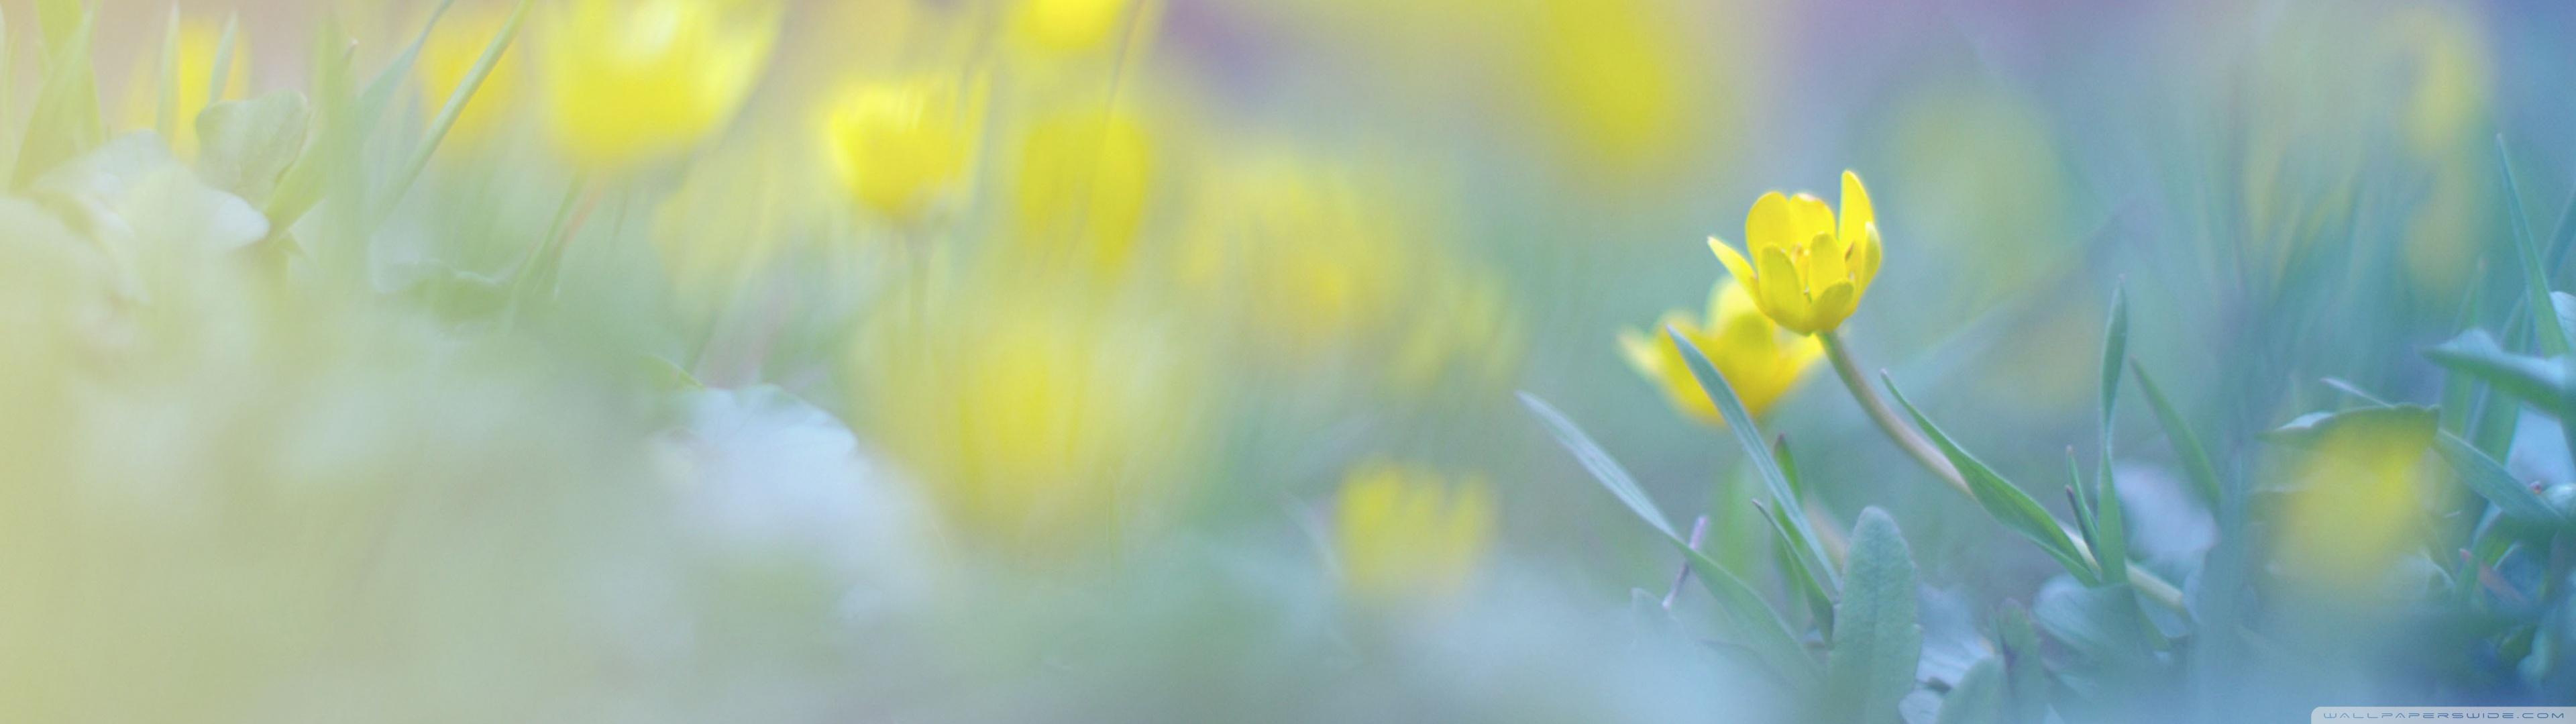 Blurred Flowers Image Ultra HD Desktop Background Wallpaper For